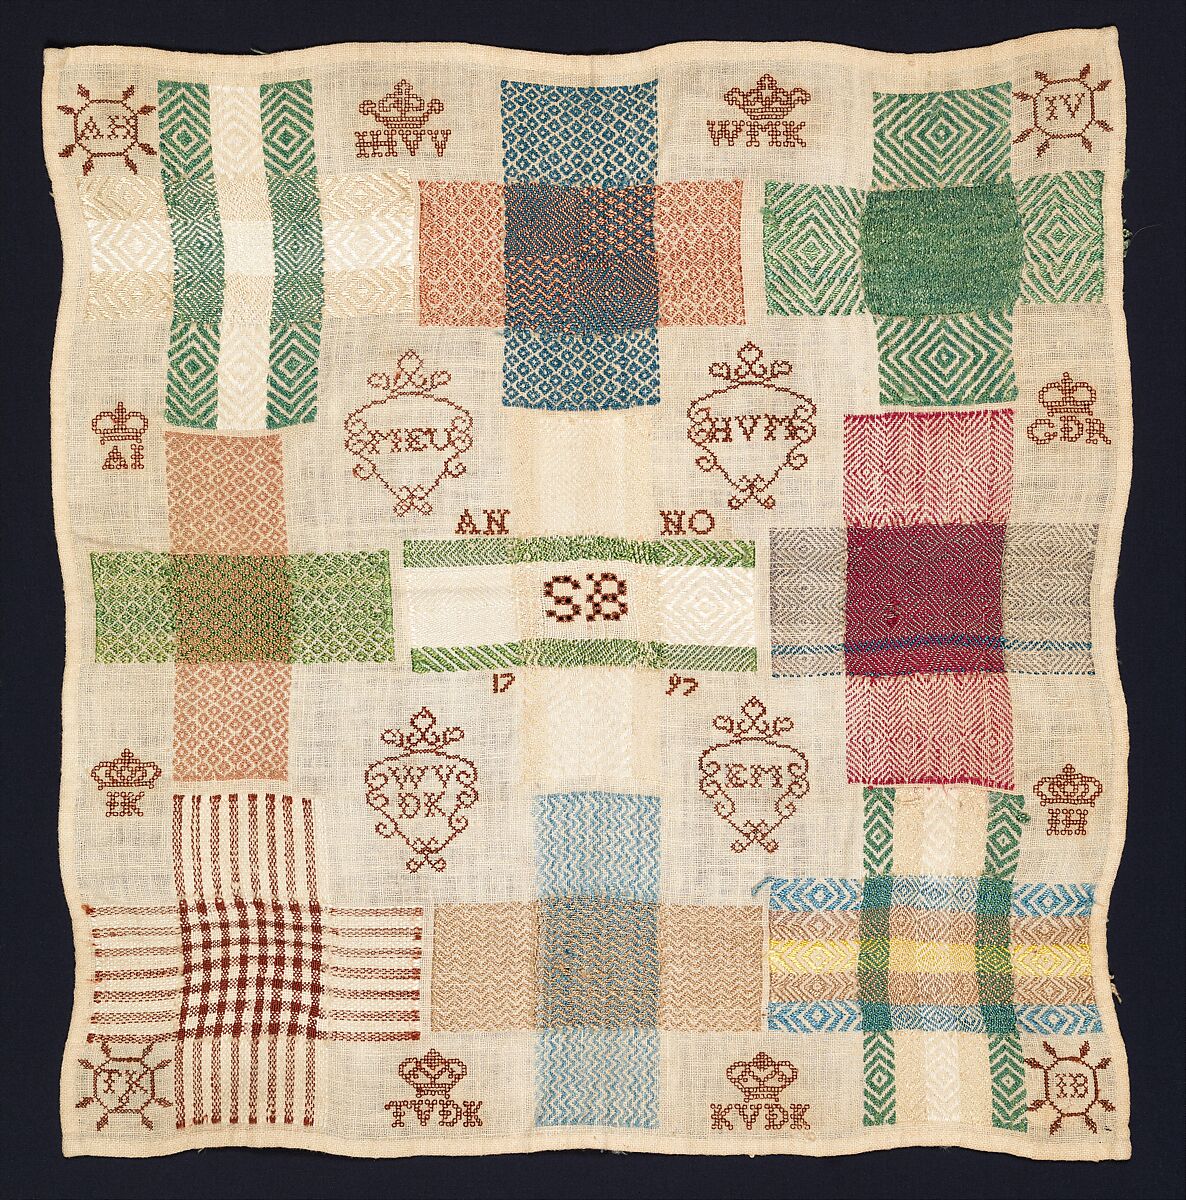 Darning sampler, Silk embroidery on cotton, Dutch 